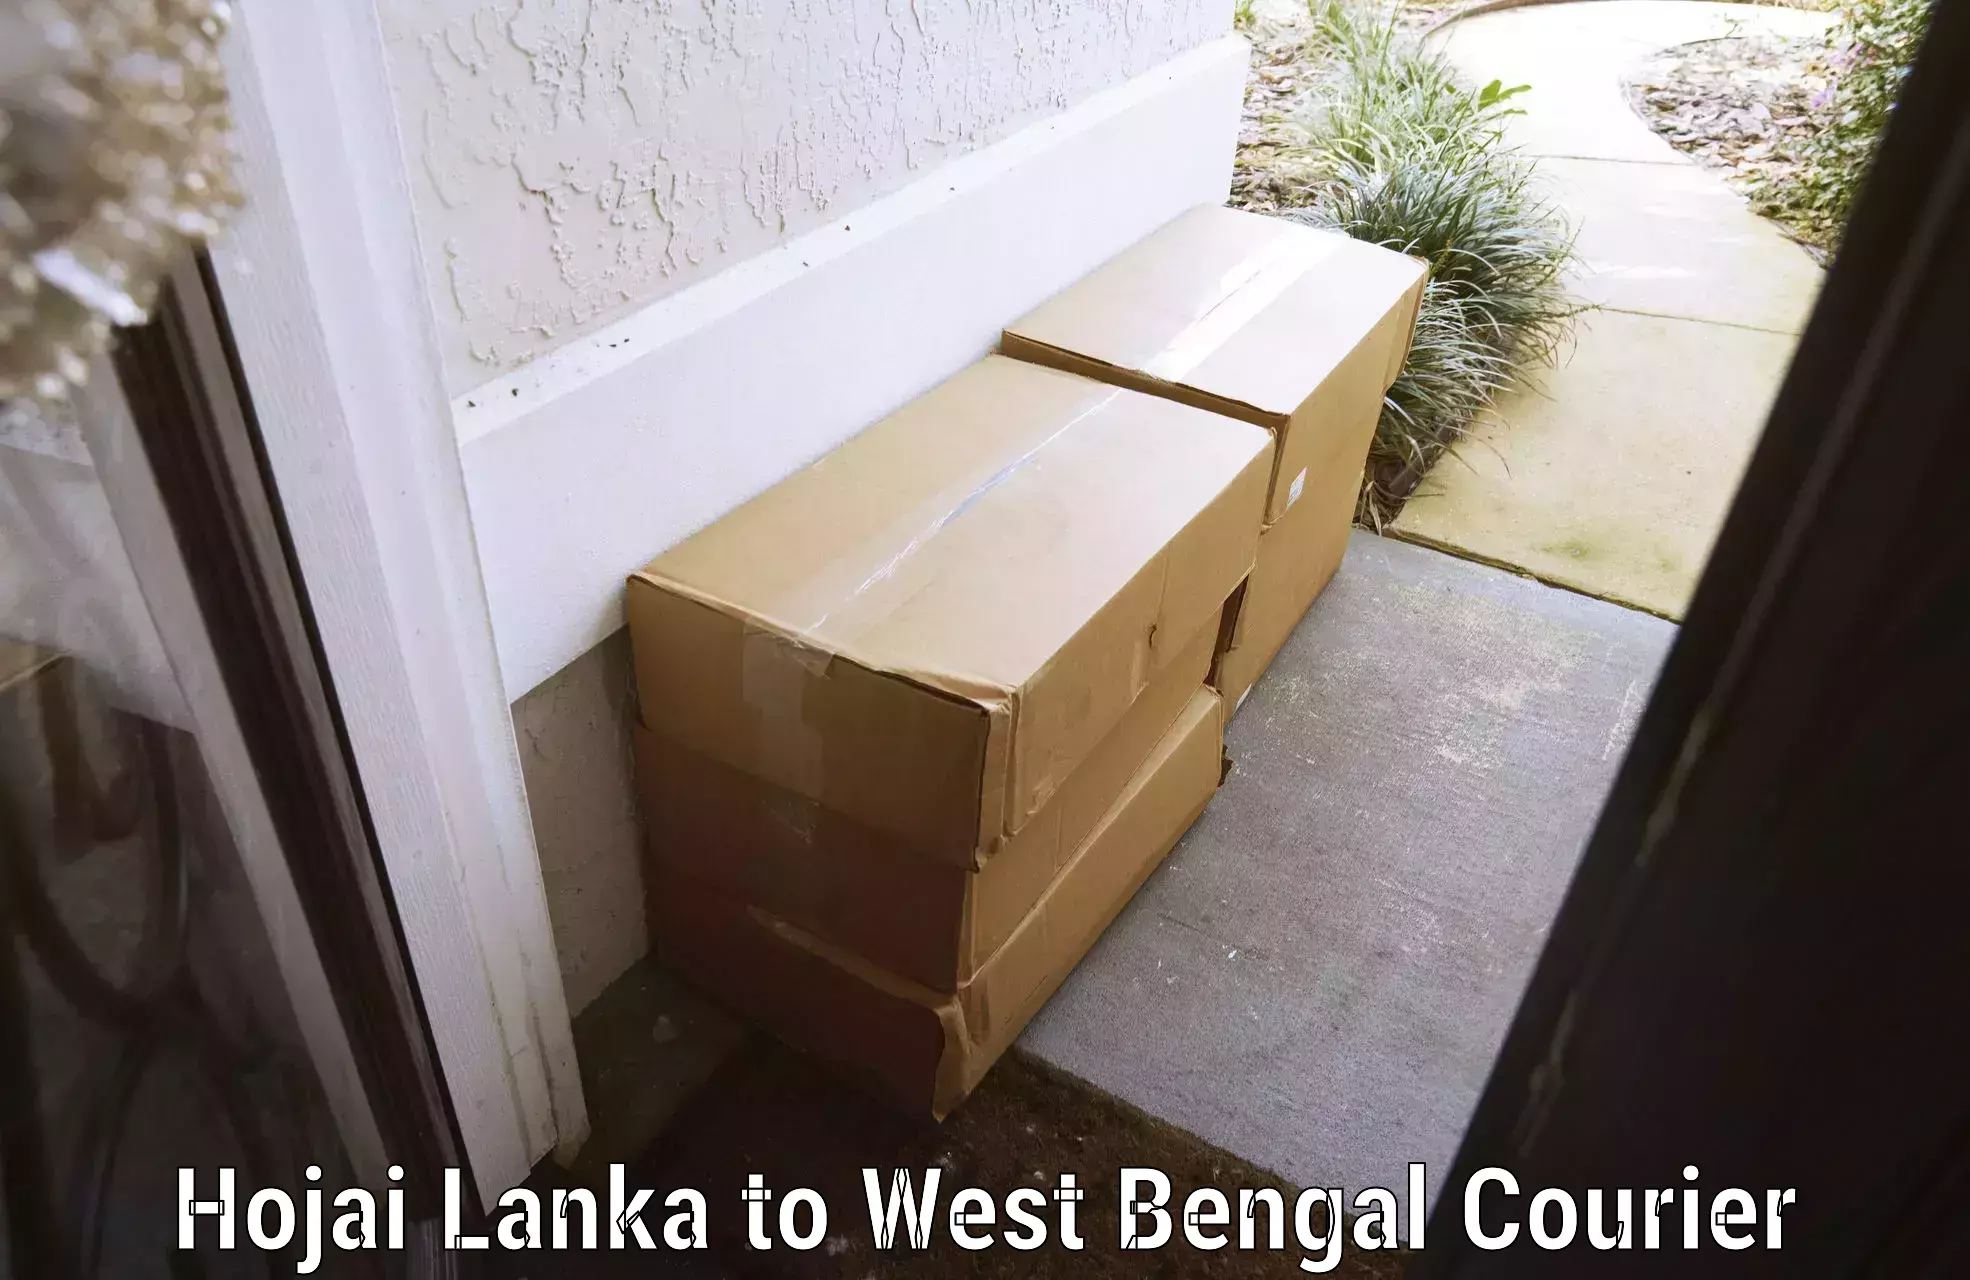 Luggage transport service Hojai Lanka to West Bengal